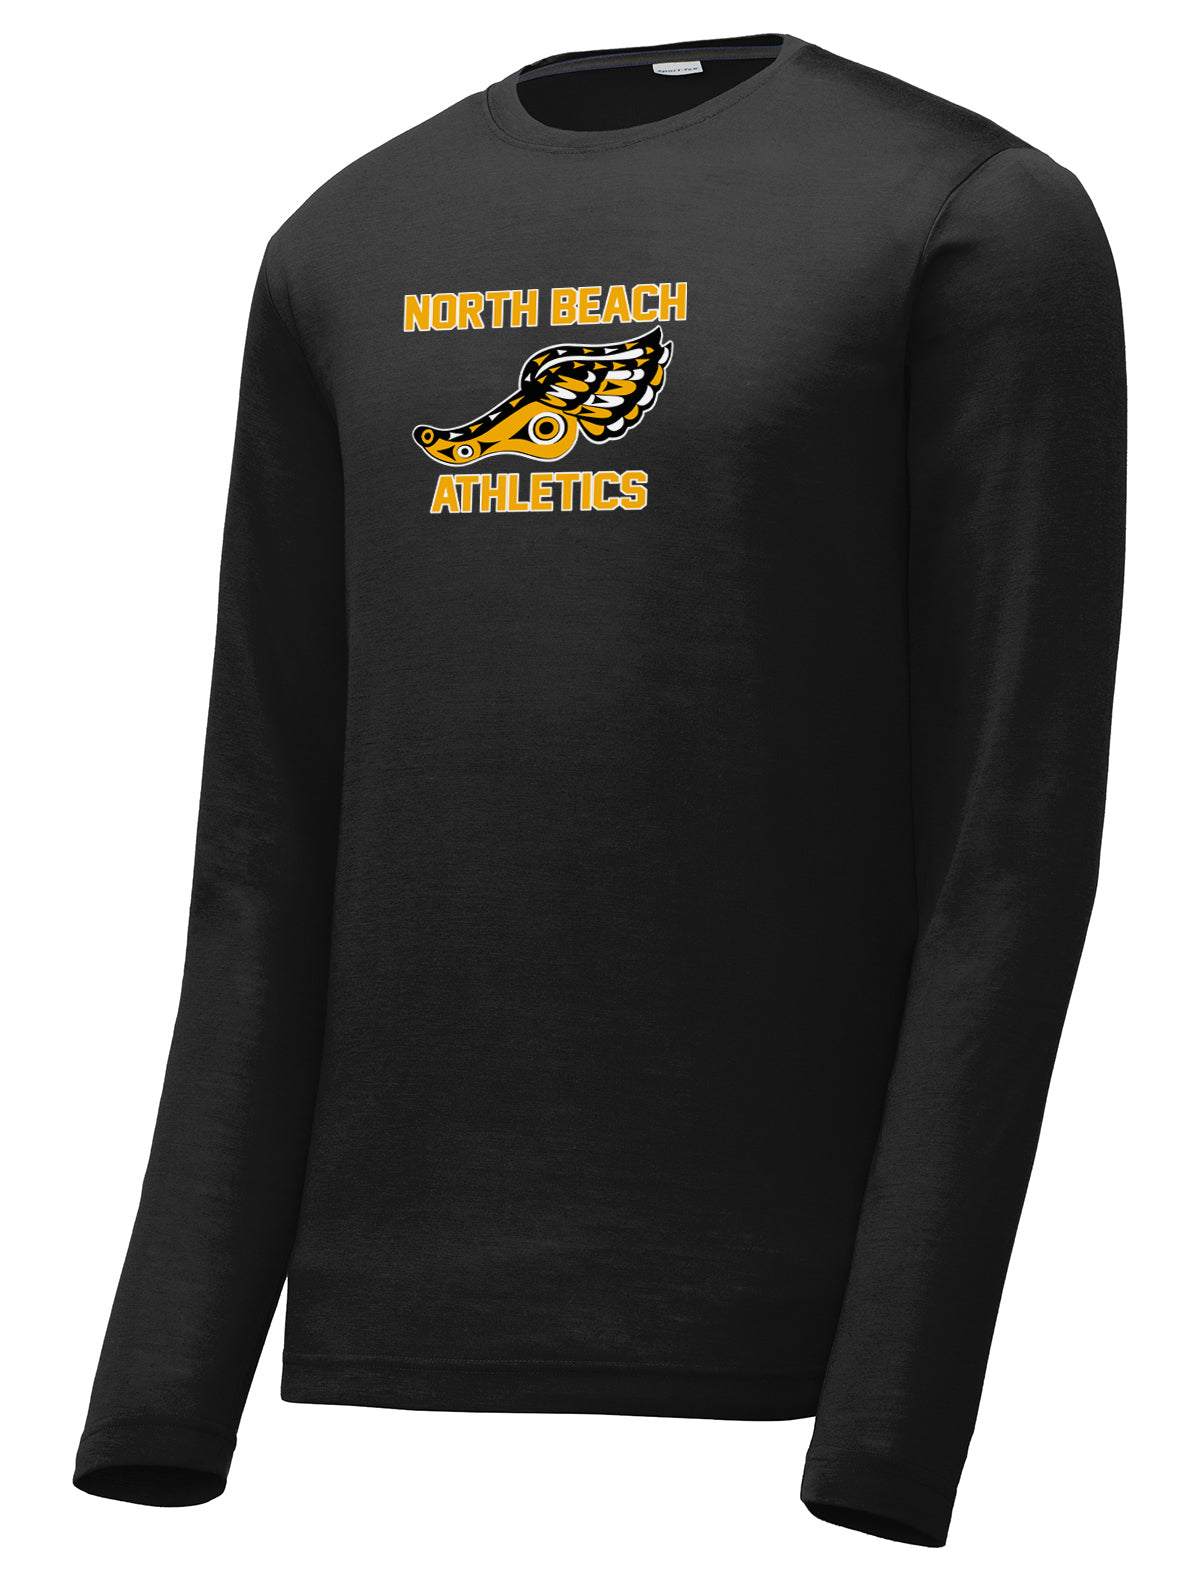 North Beach Athletics Long Sleeve CottonTouch Performance Shirt